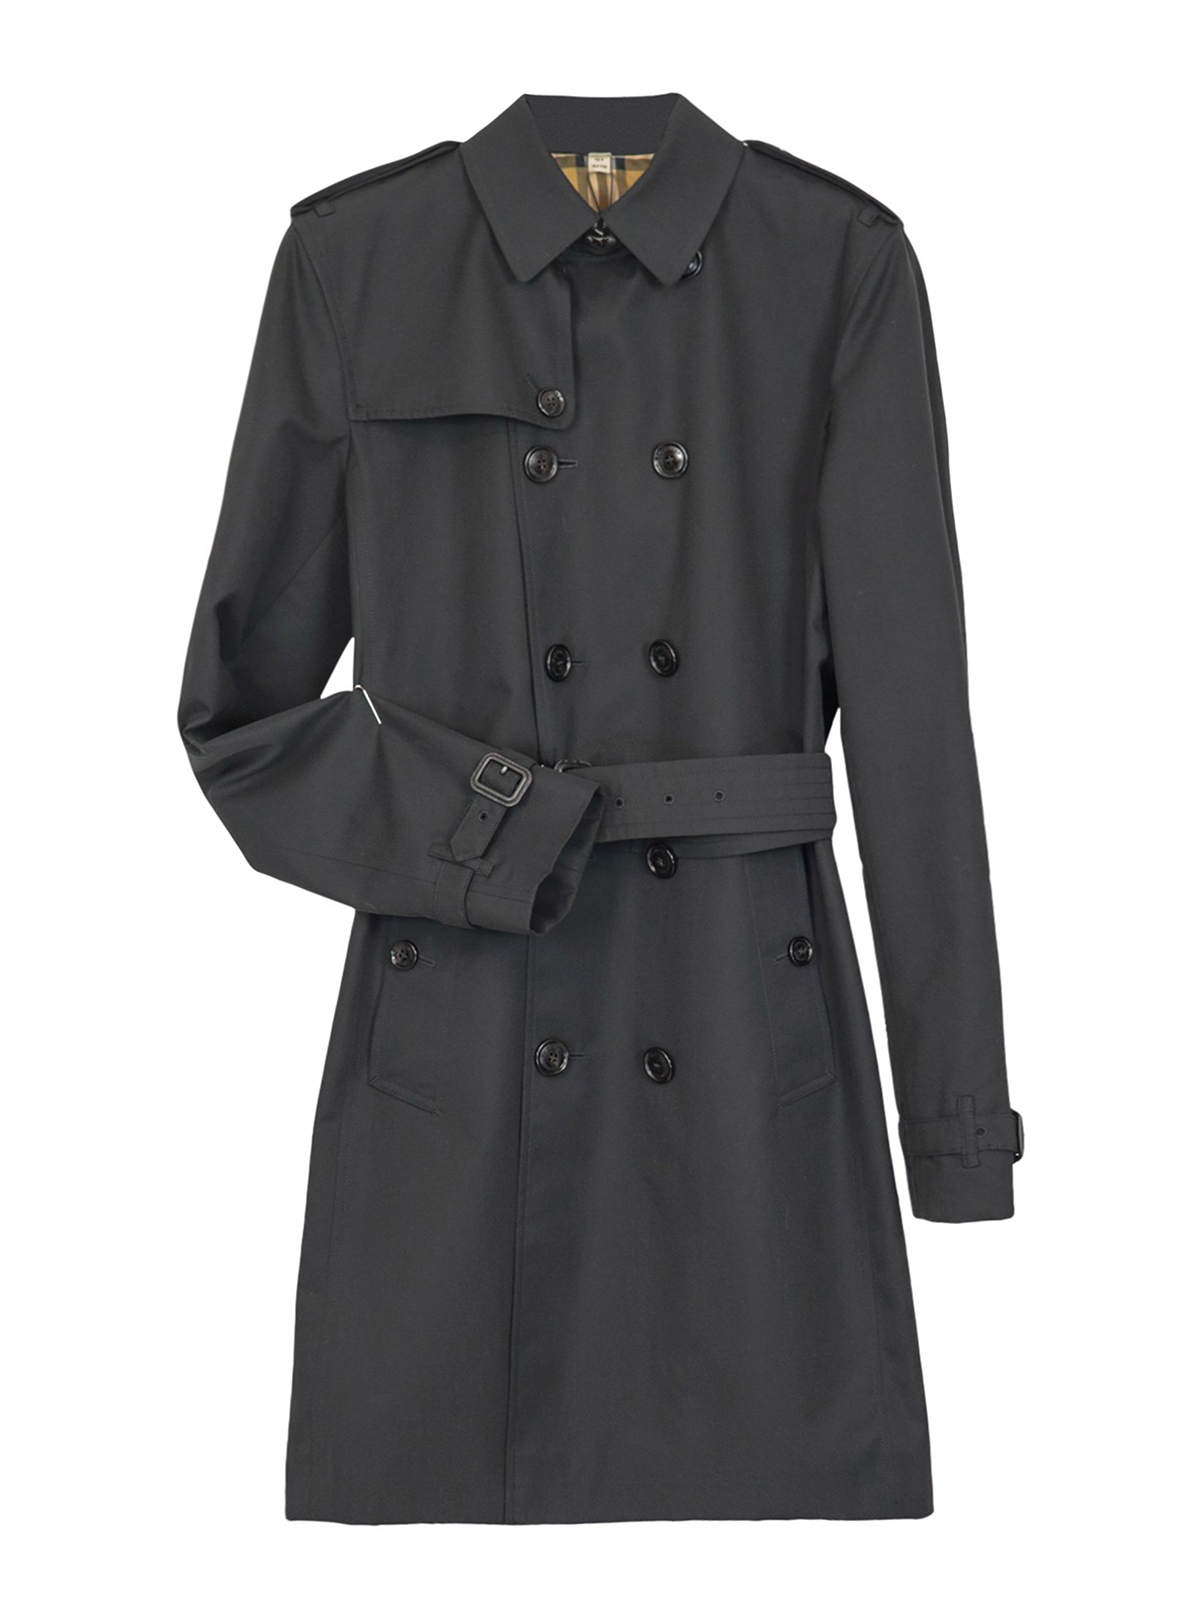 black trench coat - trench coats 